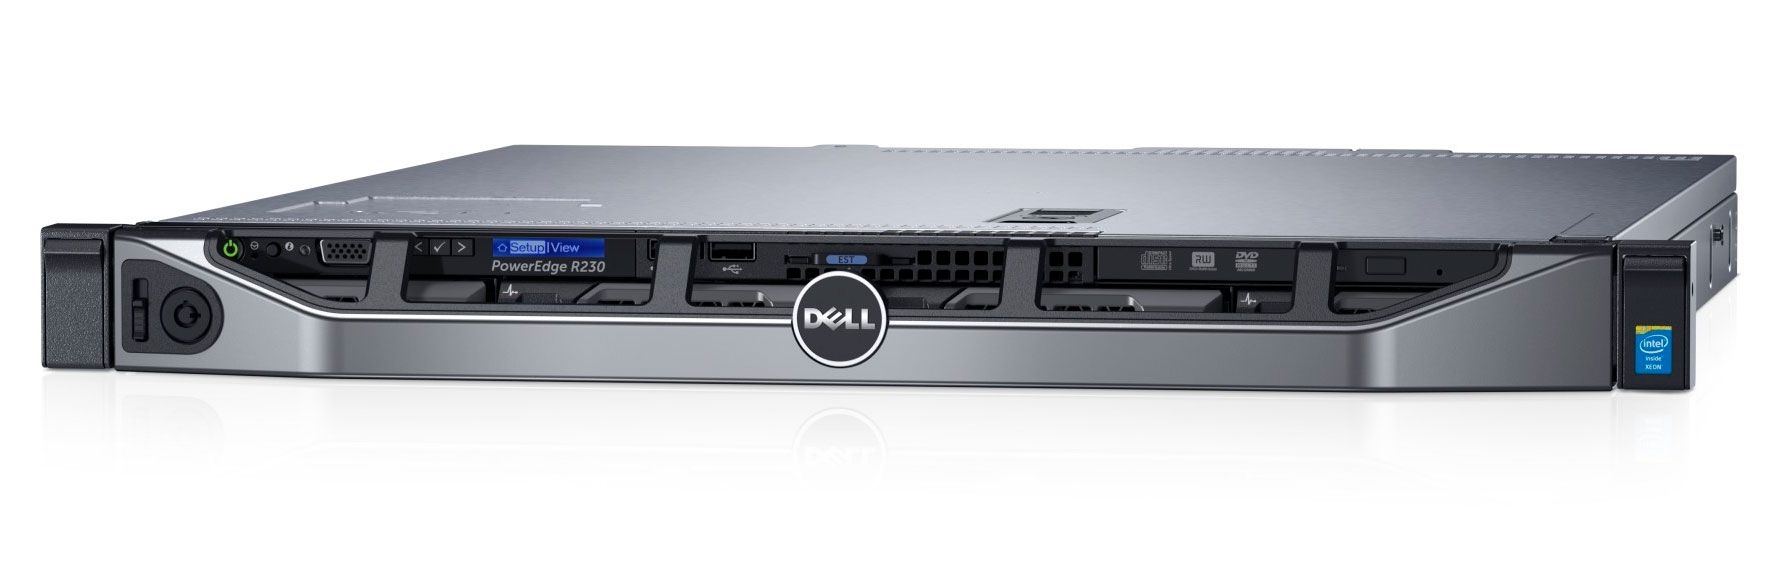 Сервер Dell PowerEdge R230 E3-1220v5 (3.0GHz, 4C), 8GB (1x8GB) UDIMM, (1)*1TB SATA 7.2k (up to 4x3.5"), Embedded SATA, Broadcom 5720 DP 1Gb LOM, iDRAC